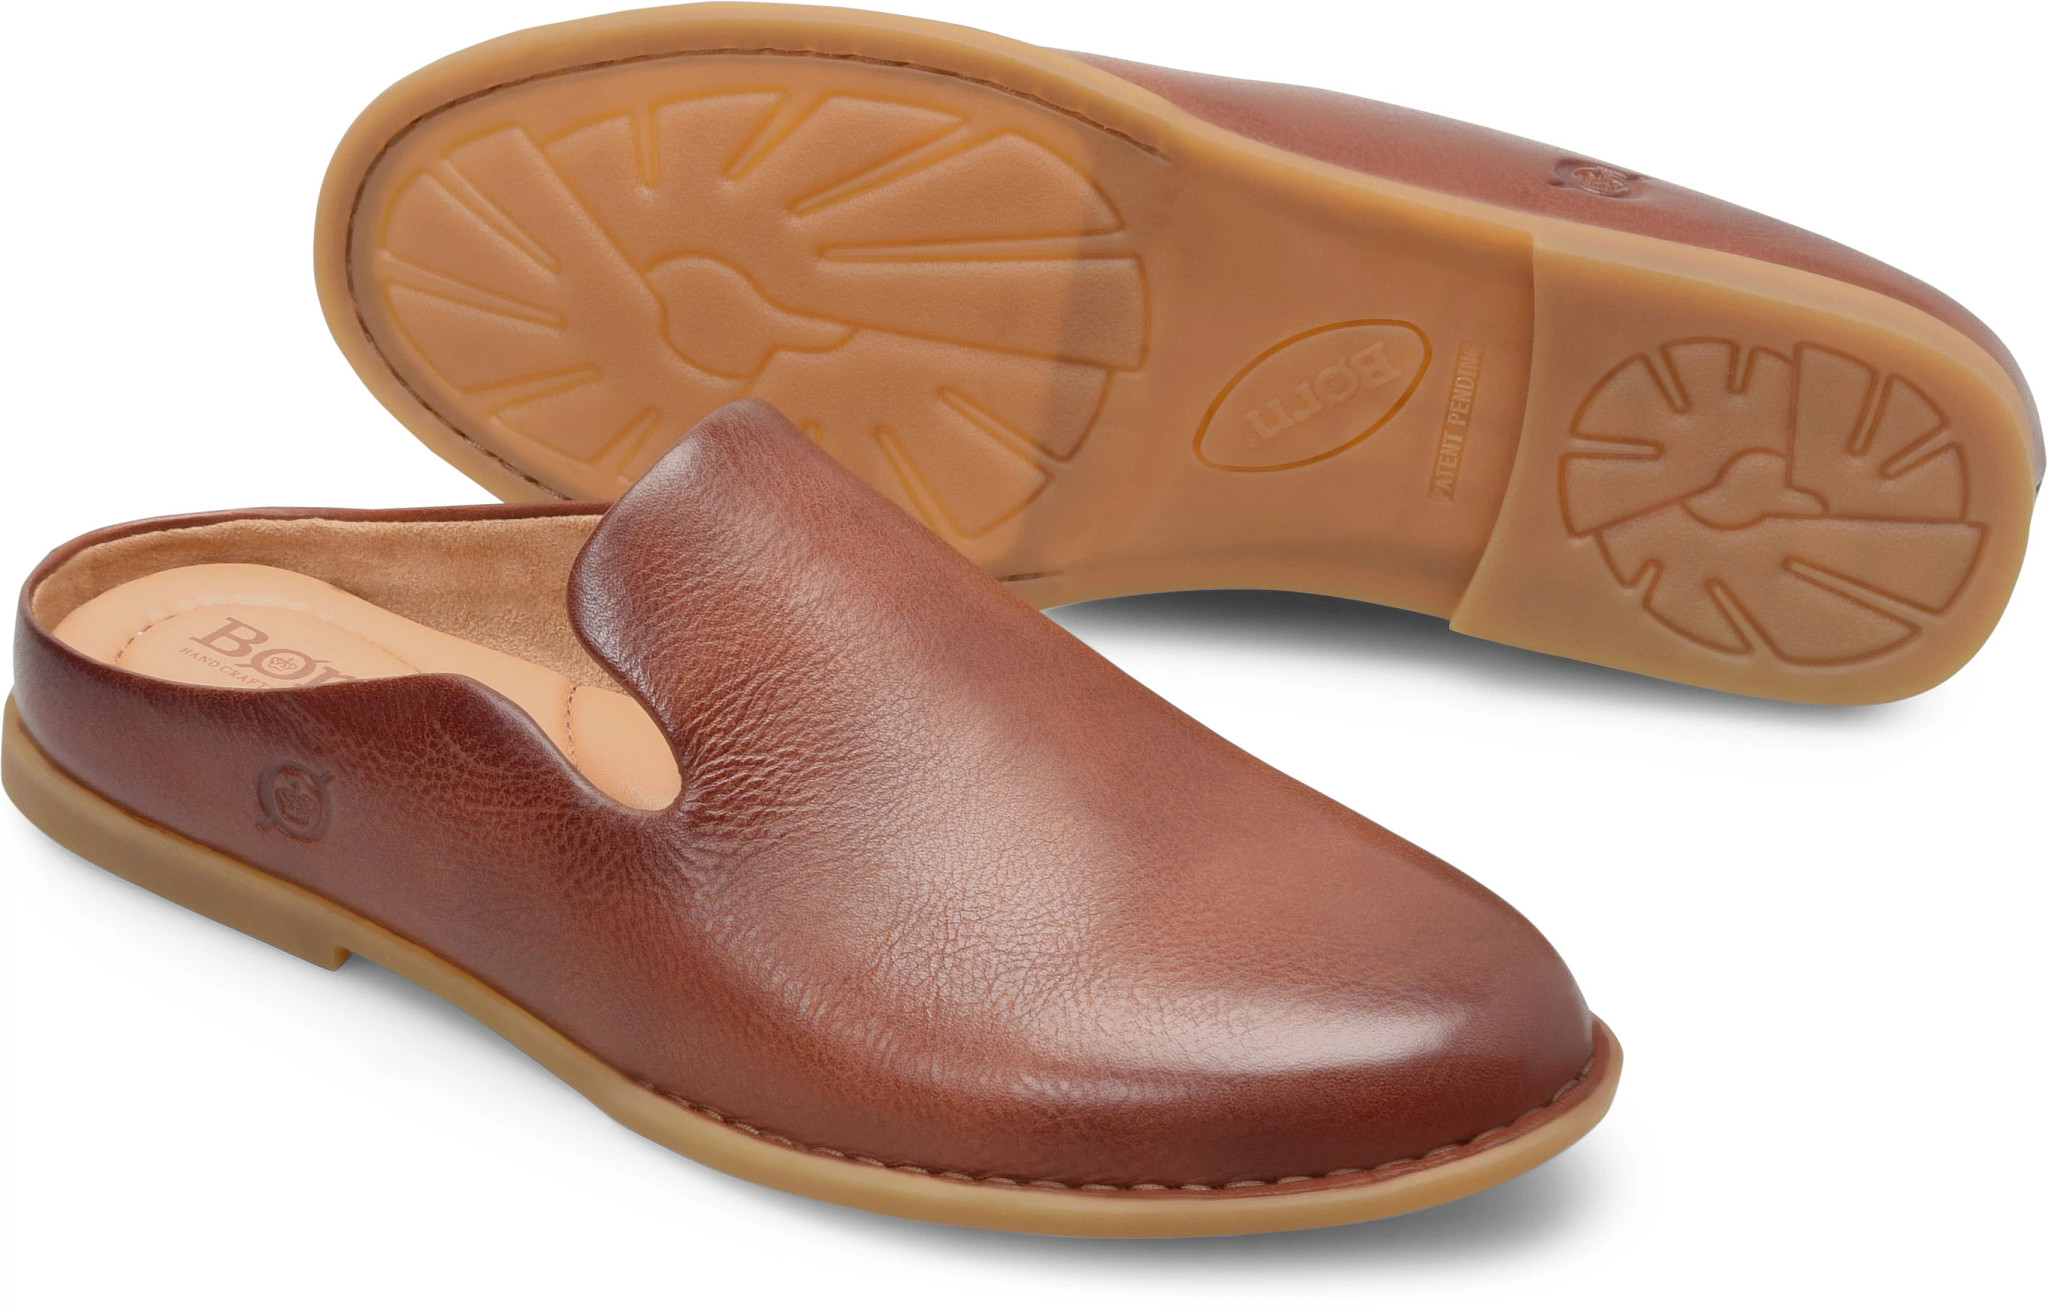 Born ladies leather flats size 8.5 Schoenen damesschoenen Instappers Loafers 